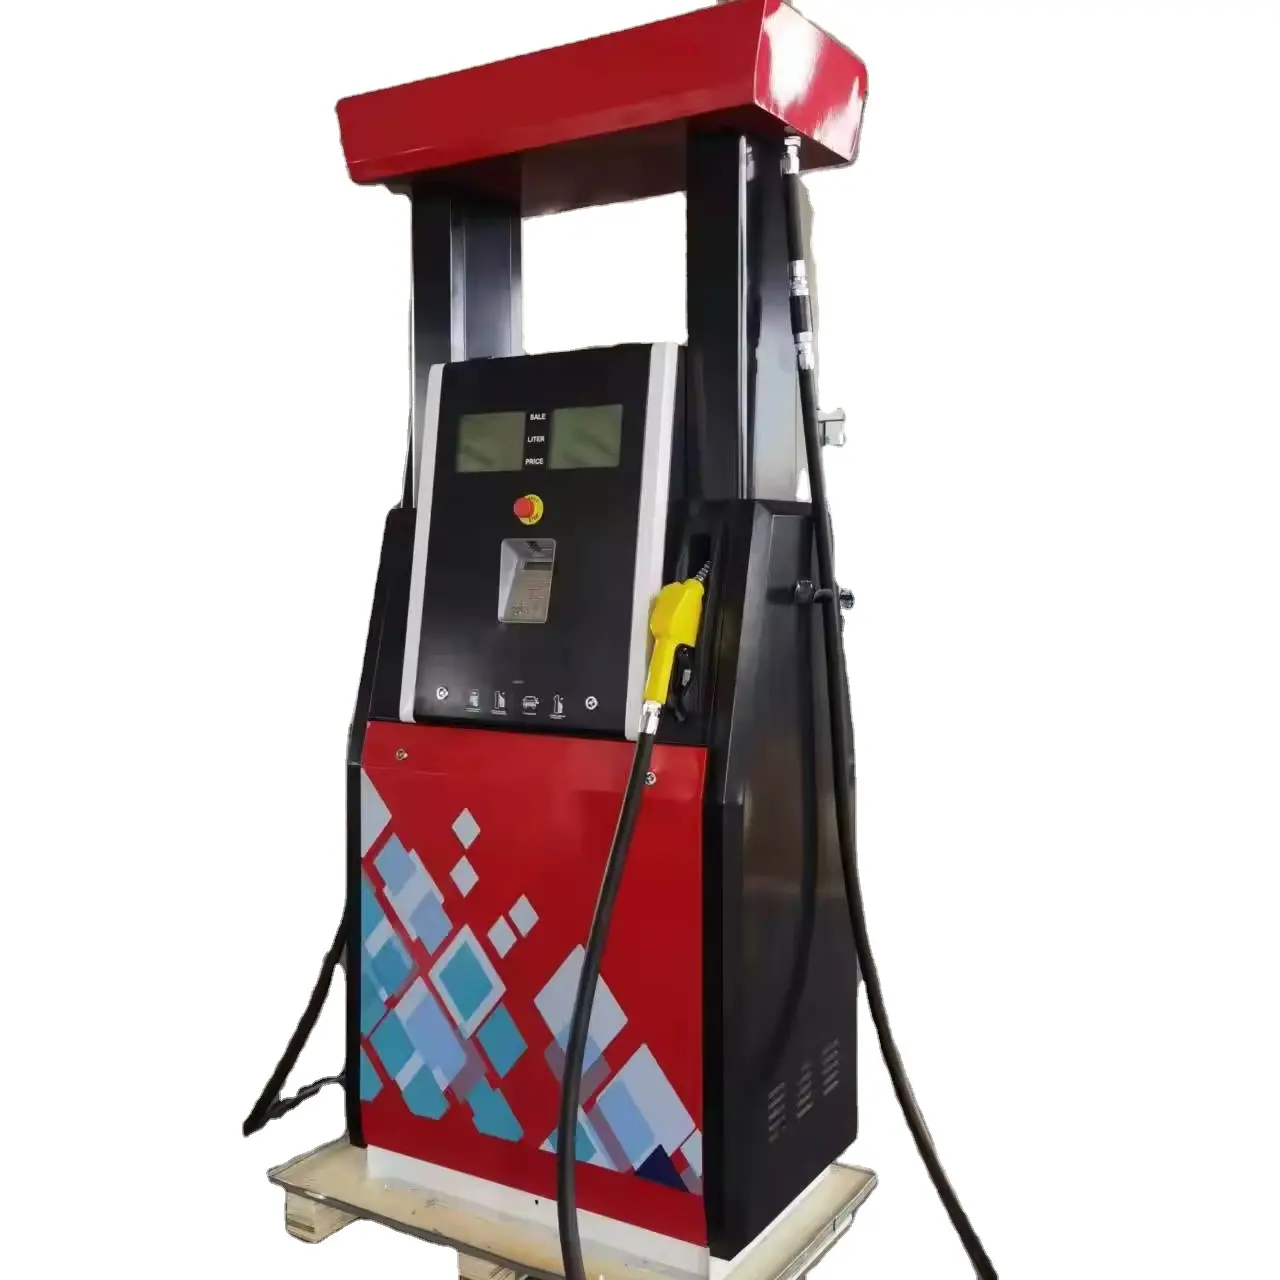 Tatsuno Fuel Dispenser Gilbarco Petrol Pump Machine Fuel Dispenser Nozzle Tokheim Pump